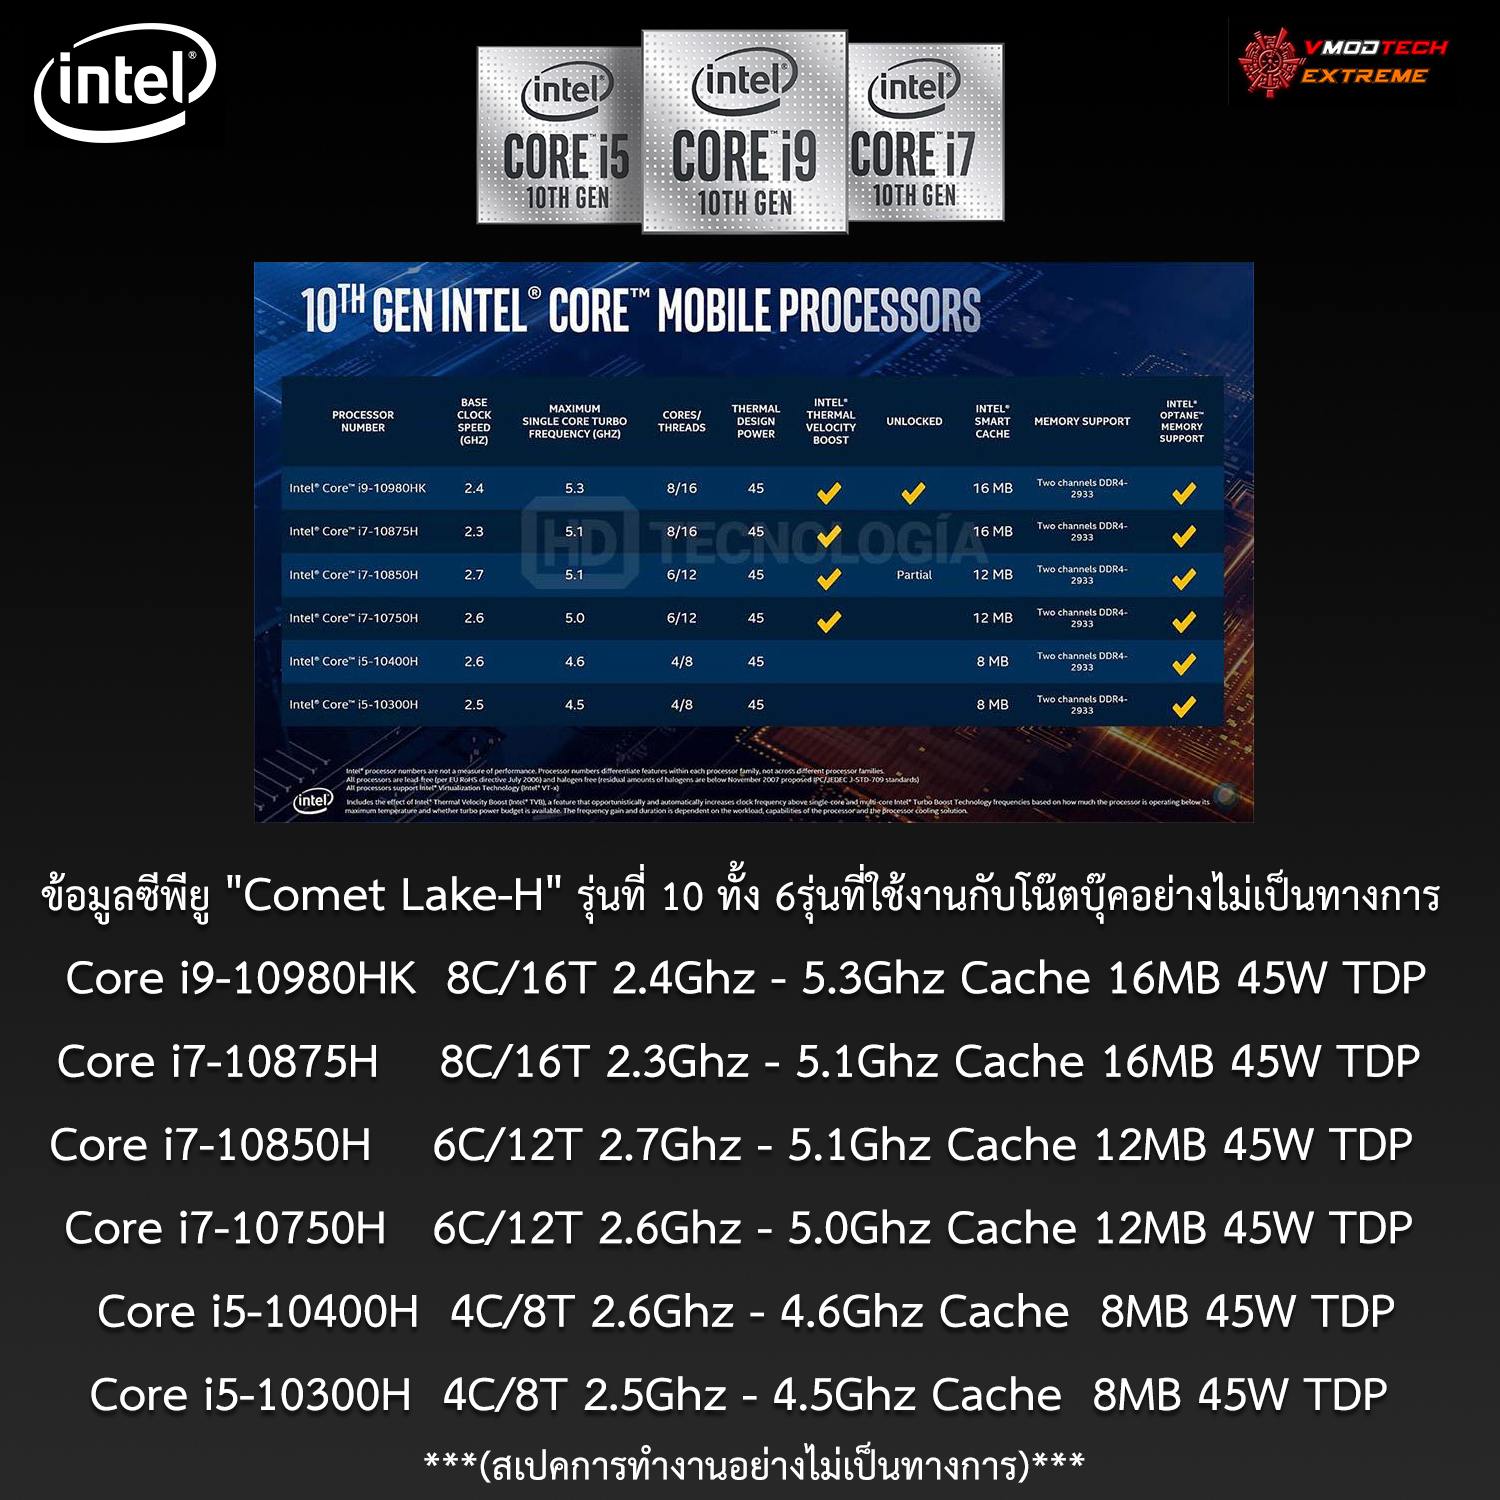 intel 10th gen commet lake h laptop หลุดสเปคซีพียู Intel Comet Lake H รุ่นที่ 10 ทั้ง 6รุ่นที่ใช้งานกับโน๊ตบุ๊คอย่างไม่เป็นทางการ  